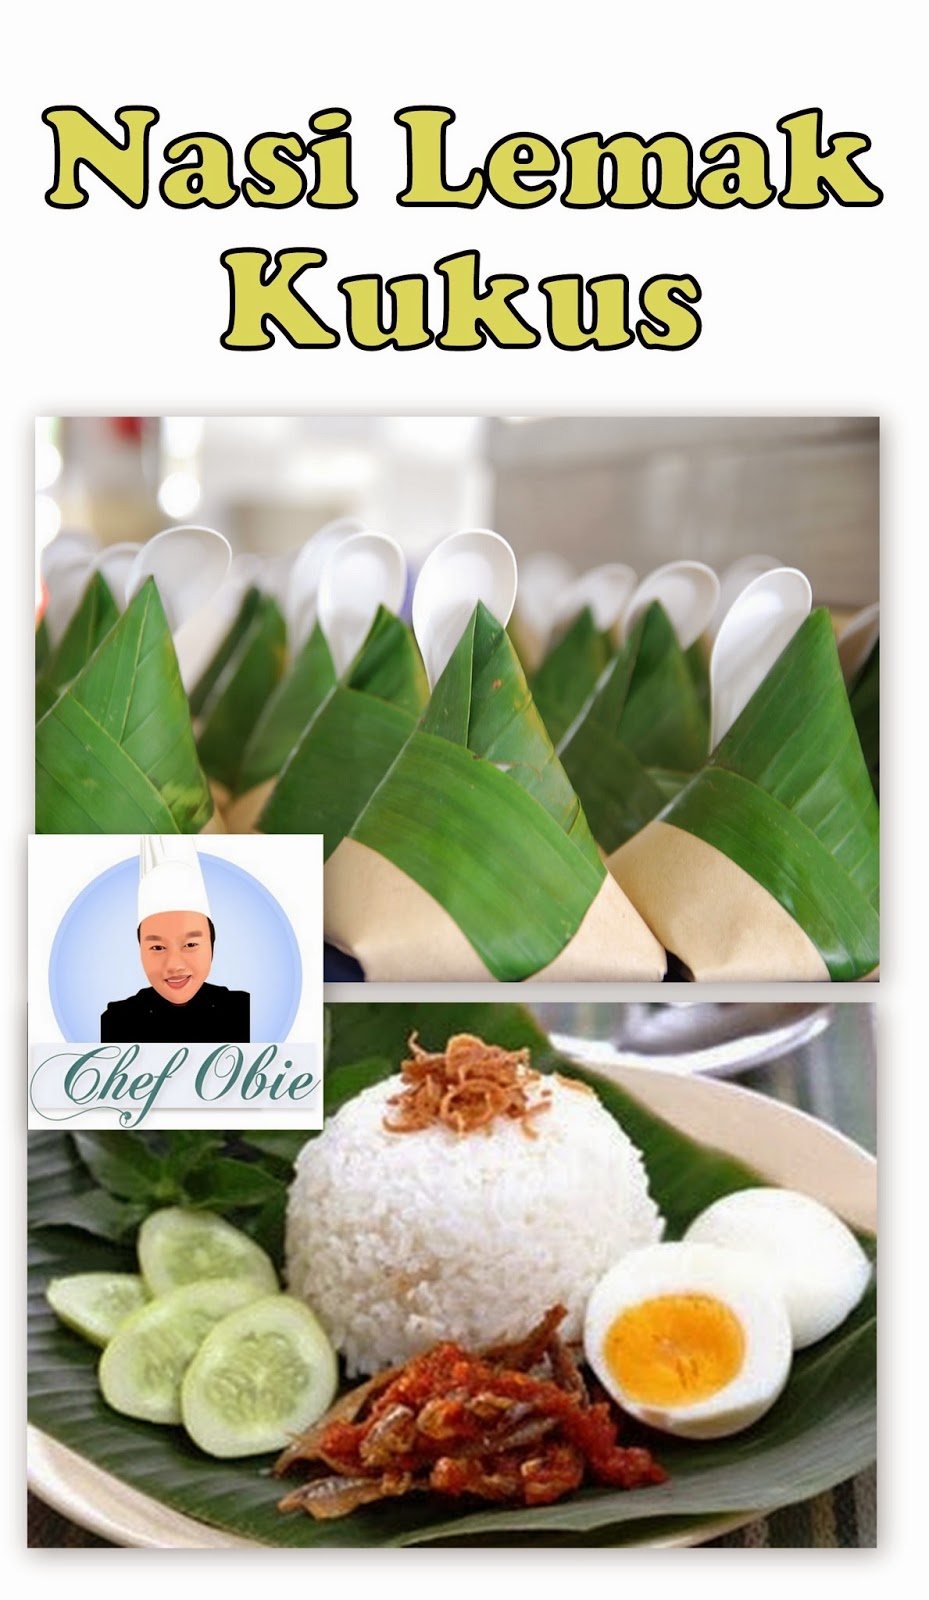 Chef Obie Kelas Masakan 1001 Info & Resepi: Resepi Kuih 